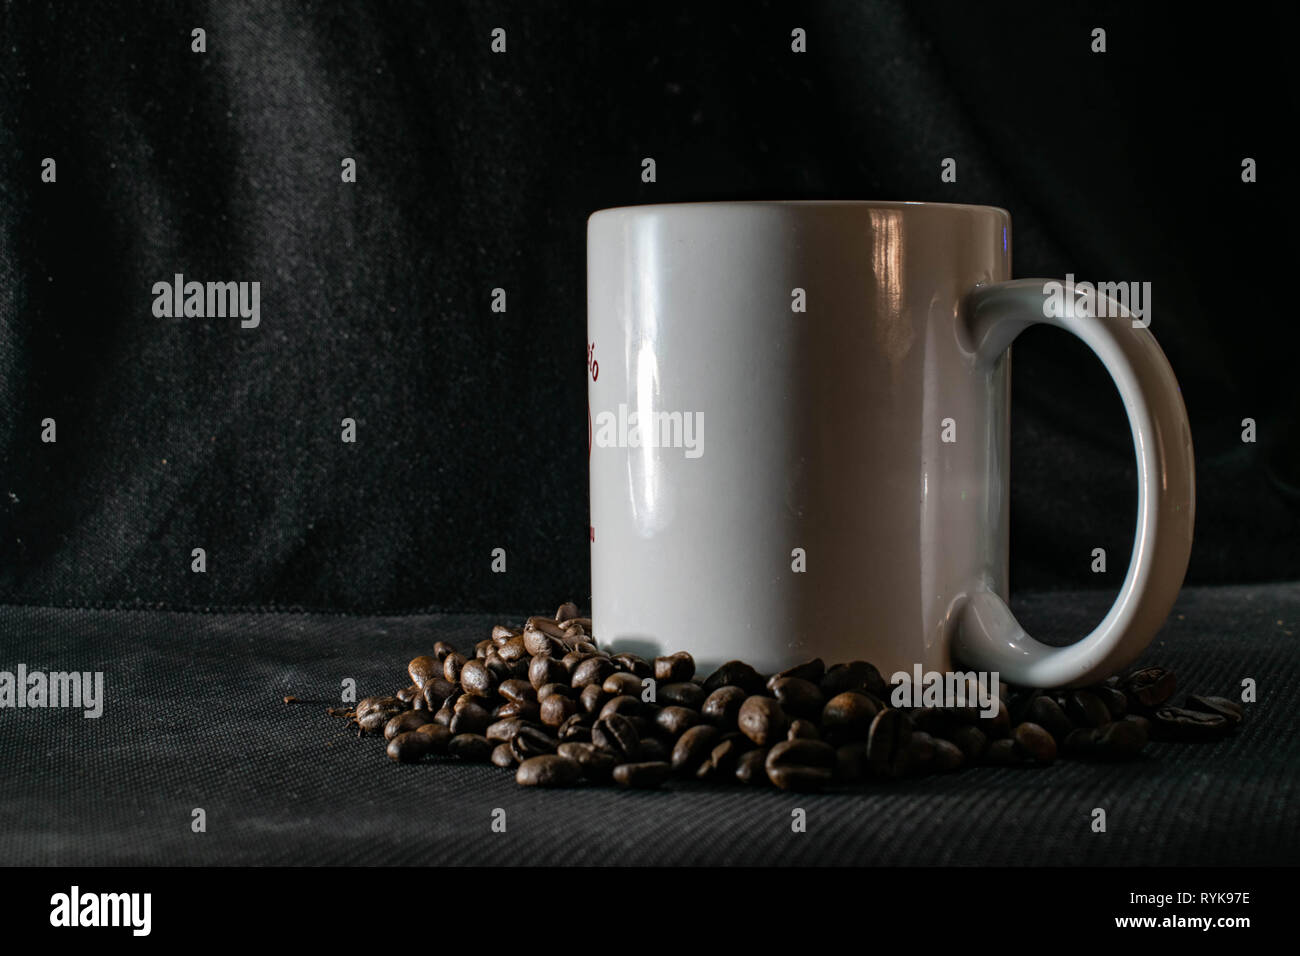 Coffee beans Stock Photo